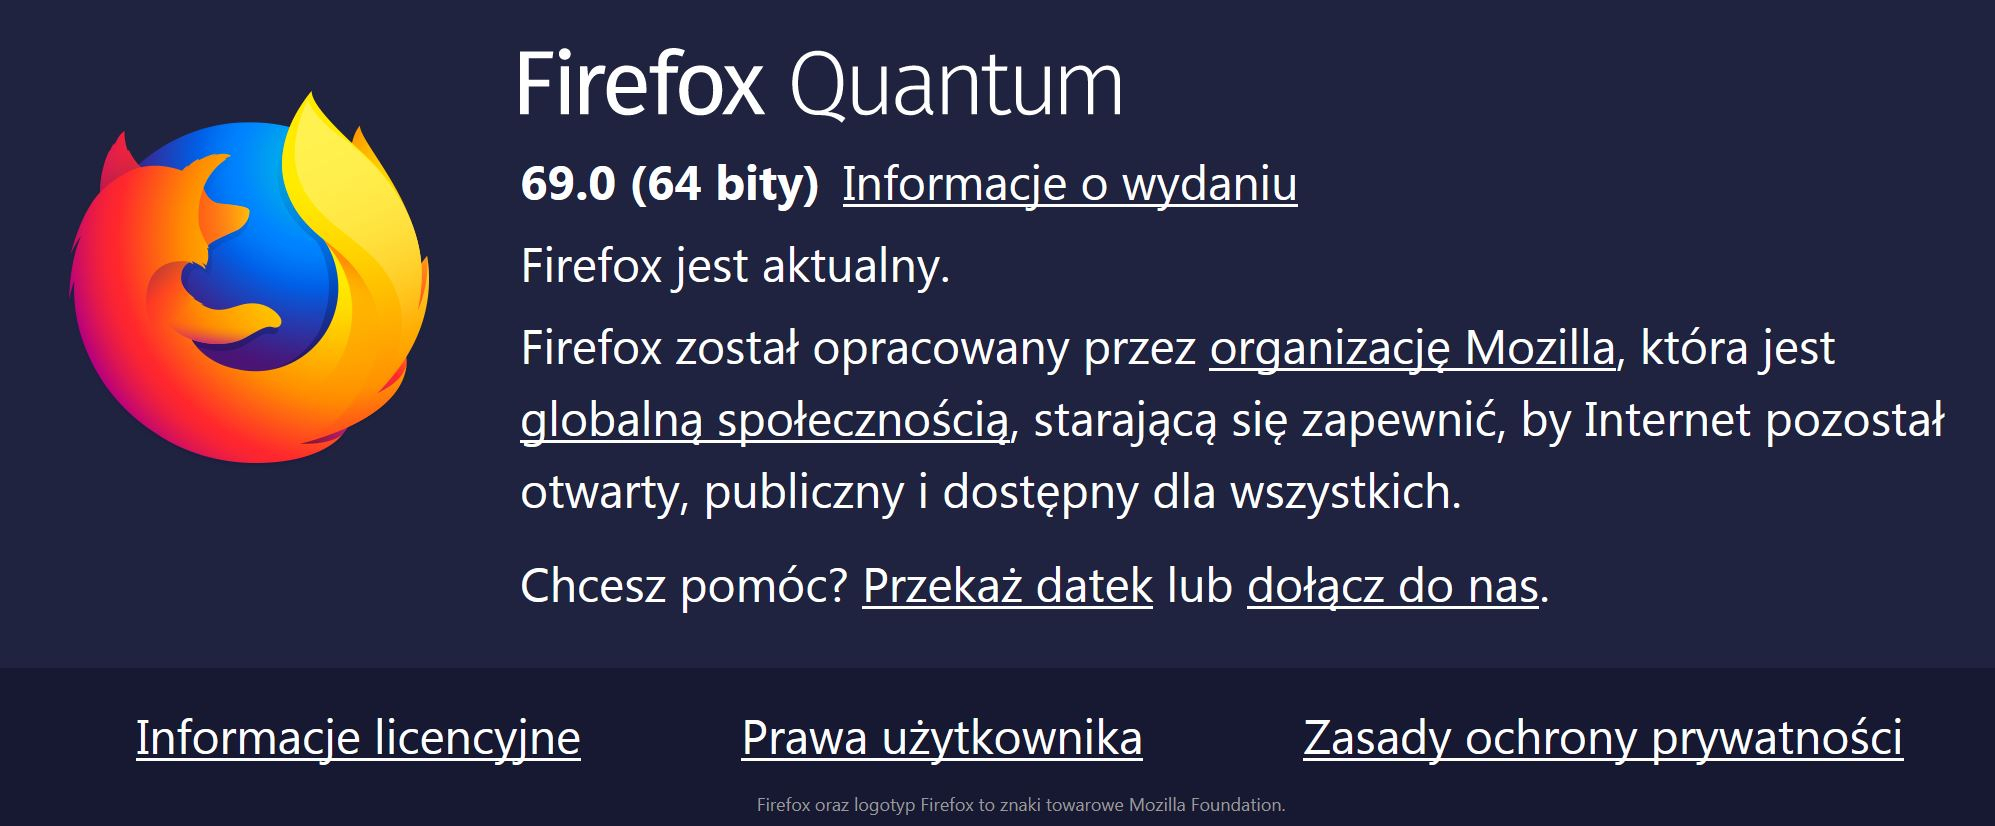 firefox quantum download for windows 10 64 bit